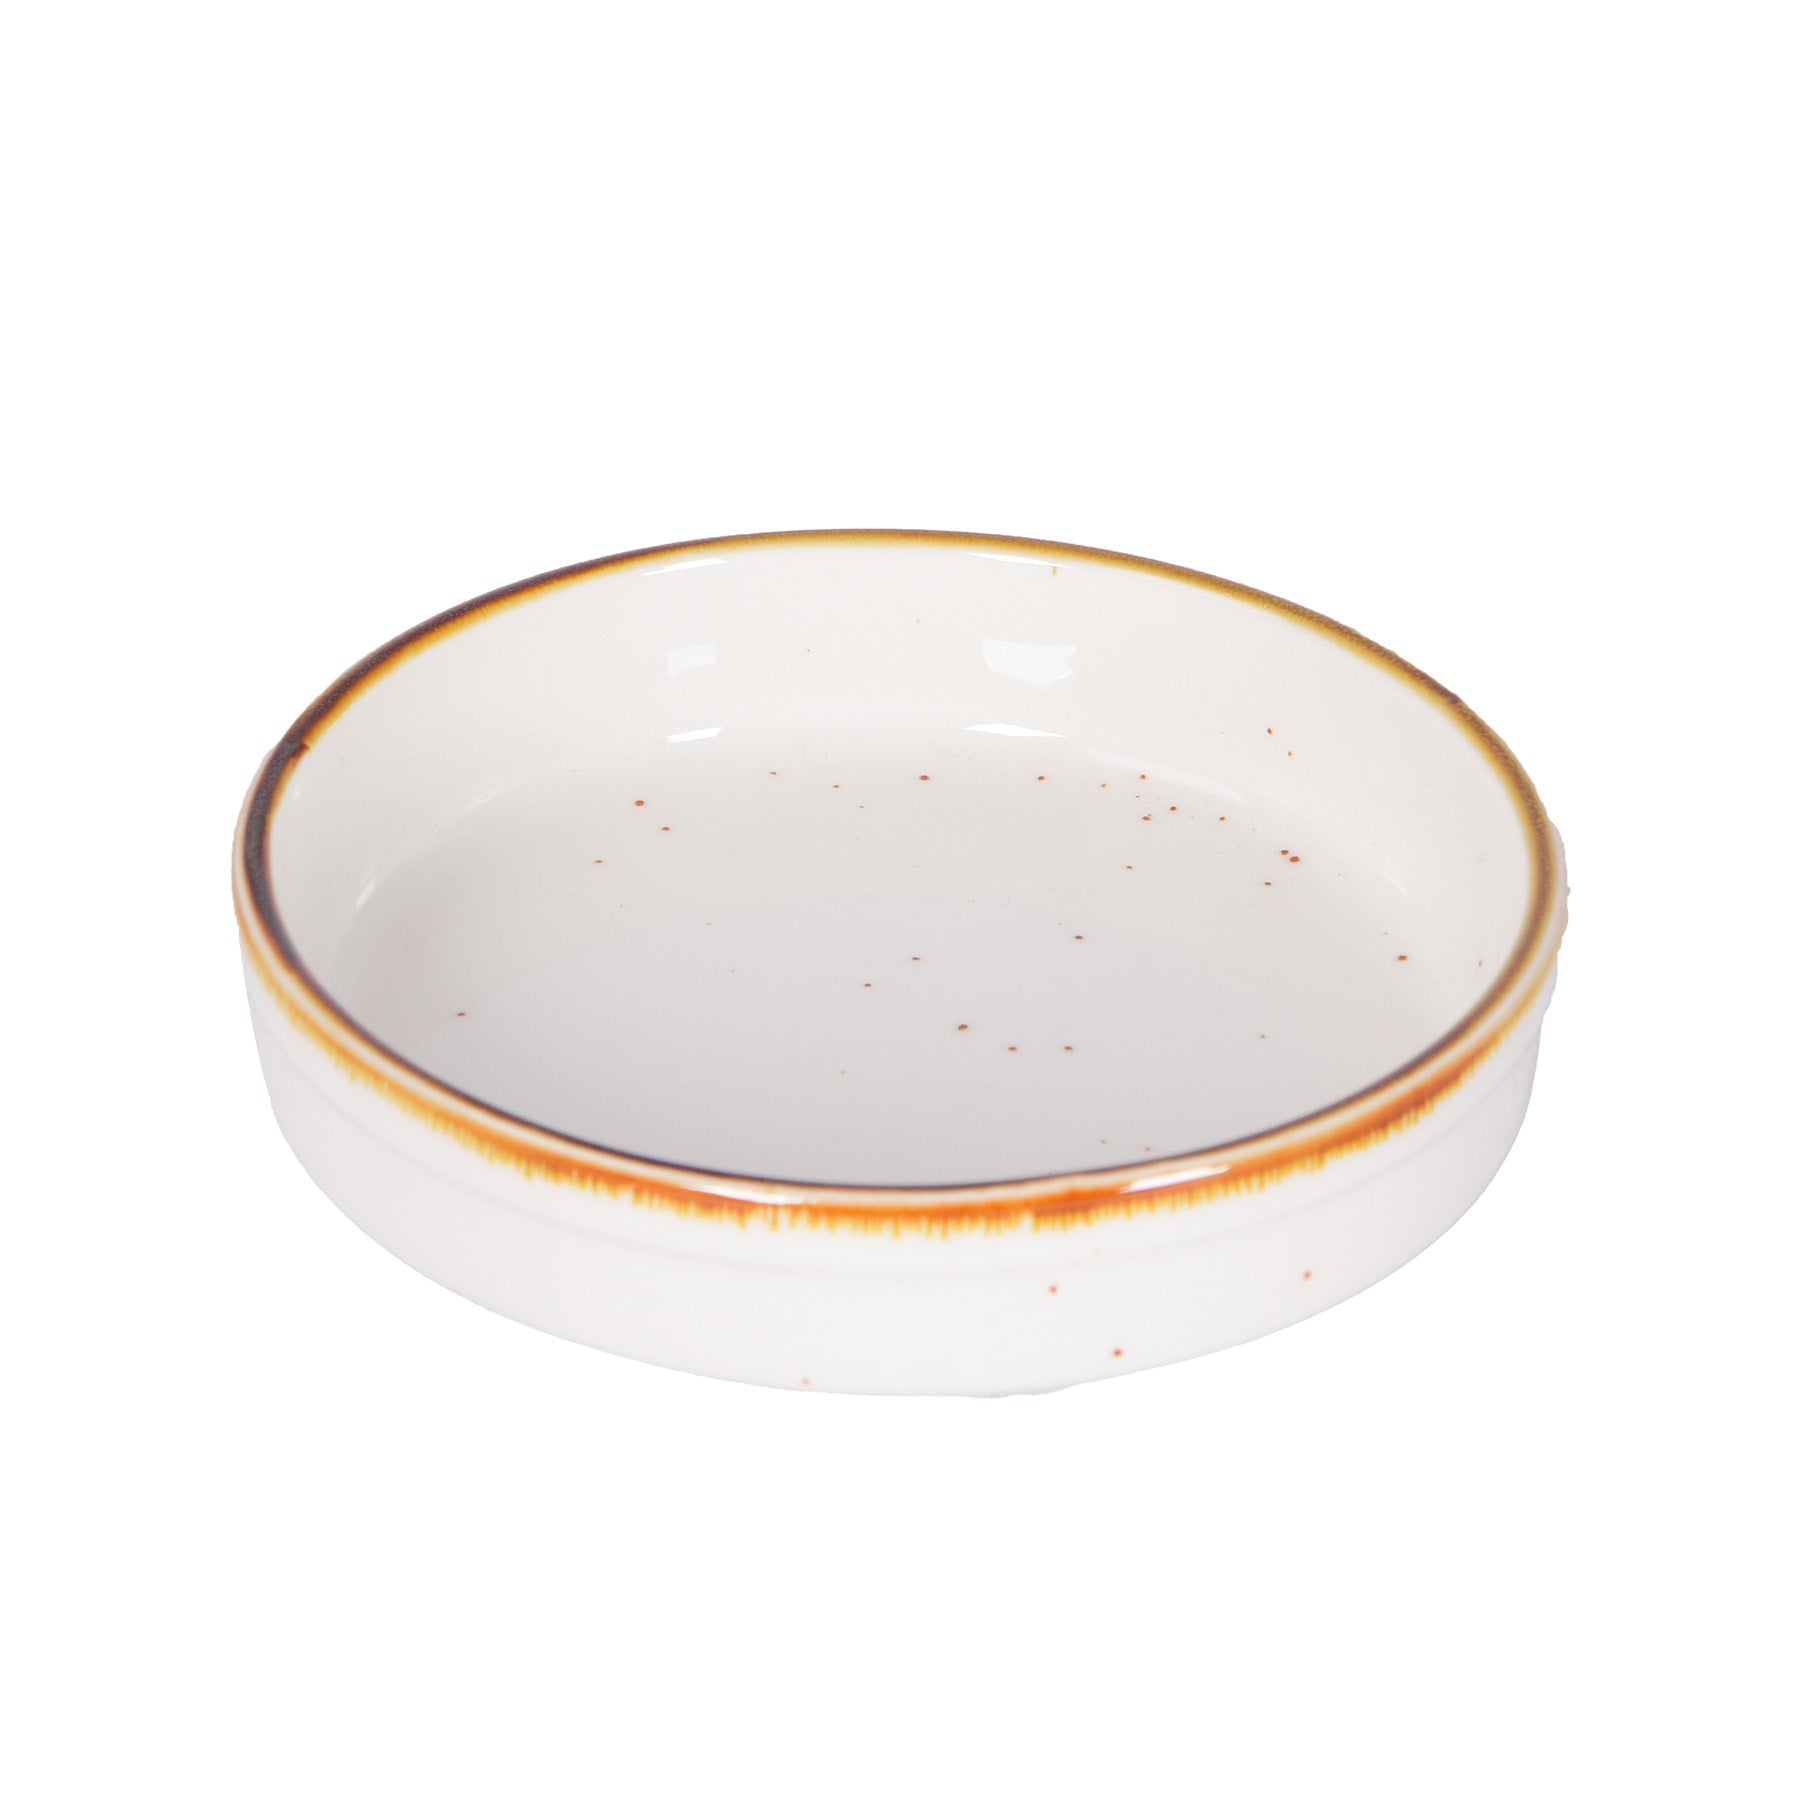 Round dish with handles, White